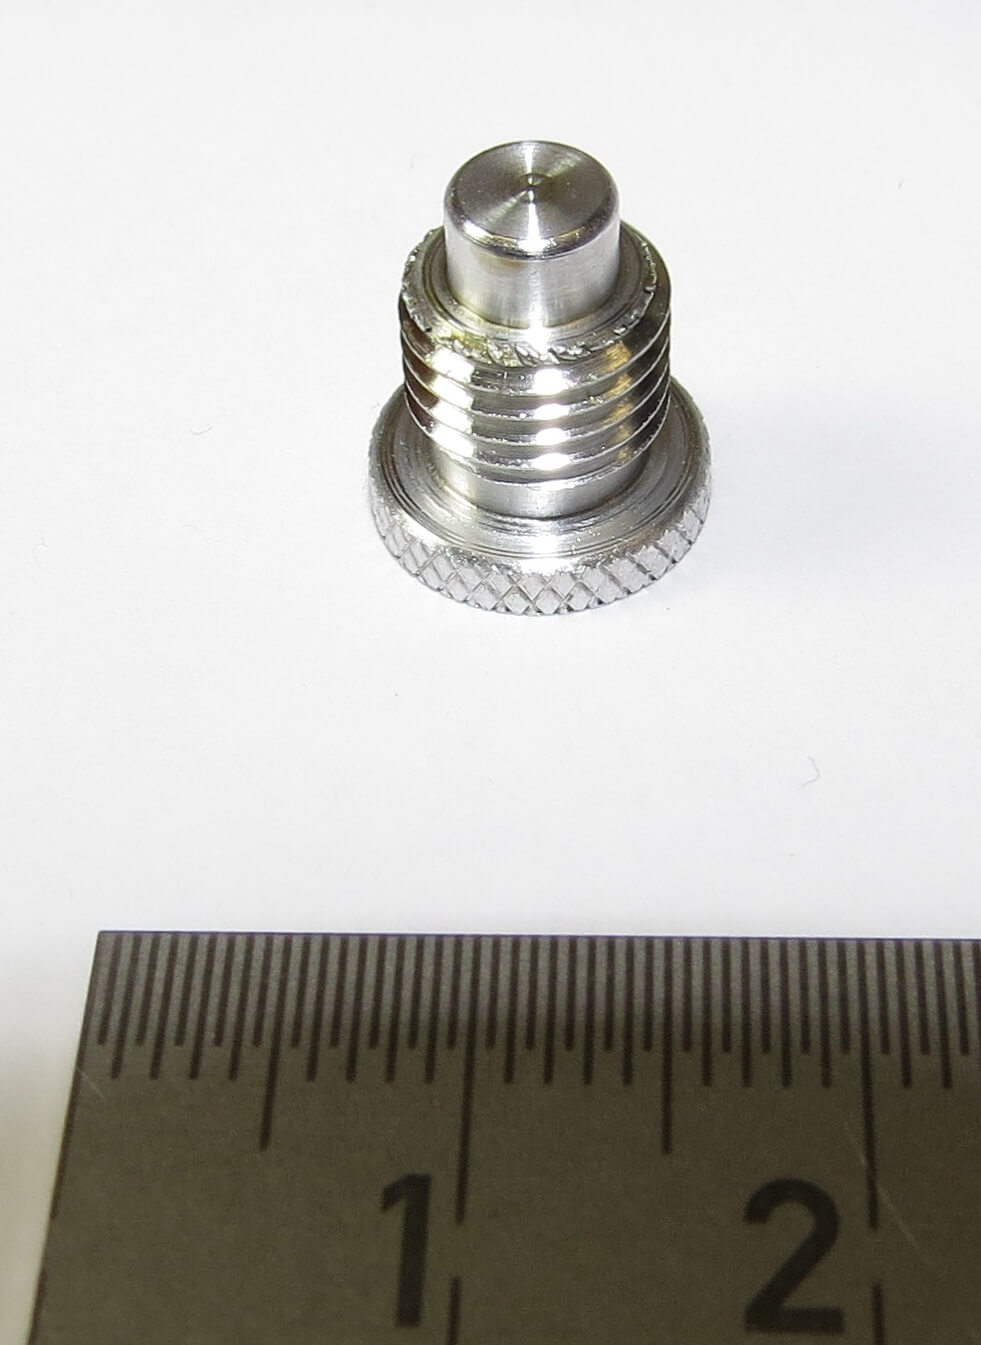 1 Dichtung für Nippel 4mm (O-Ring) 4x1. Passend zu den Leim, Dichtungen, Hydraulik, Fahrzeug-Komponenten